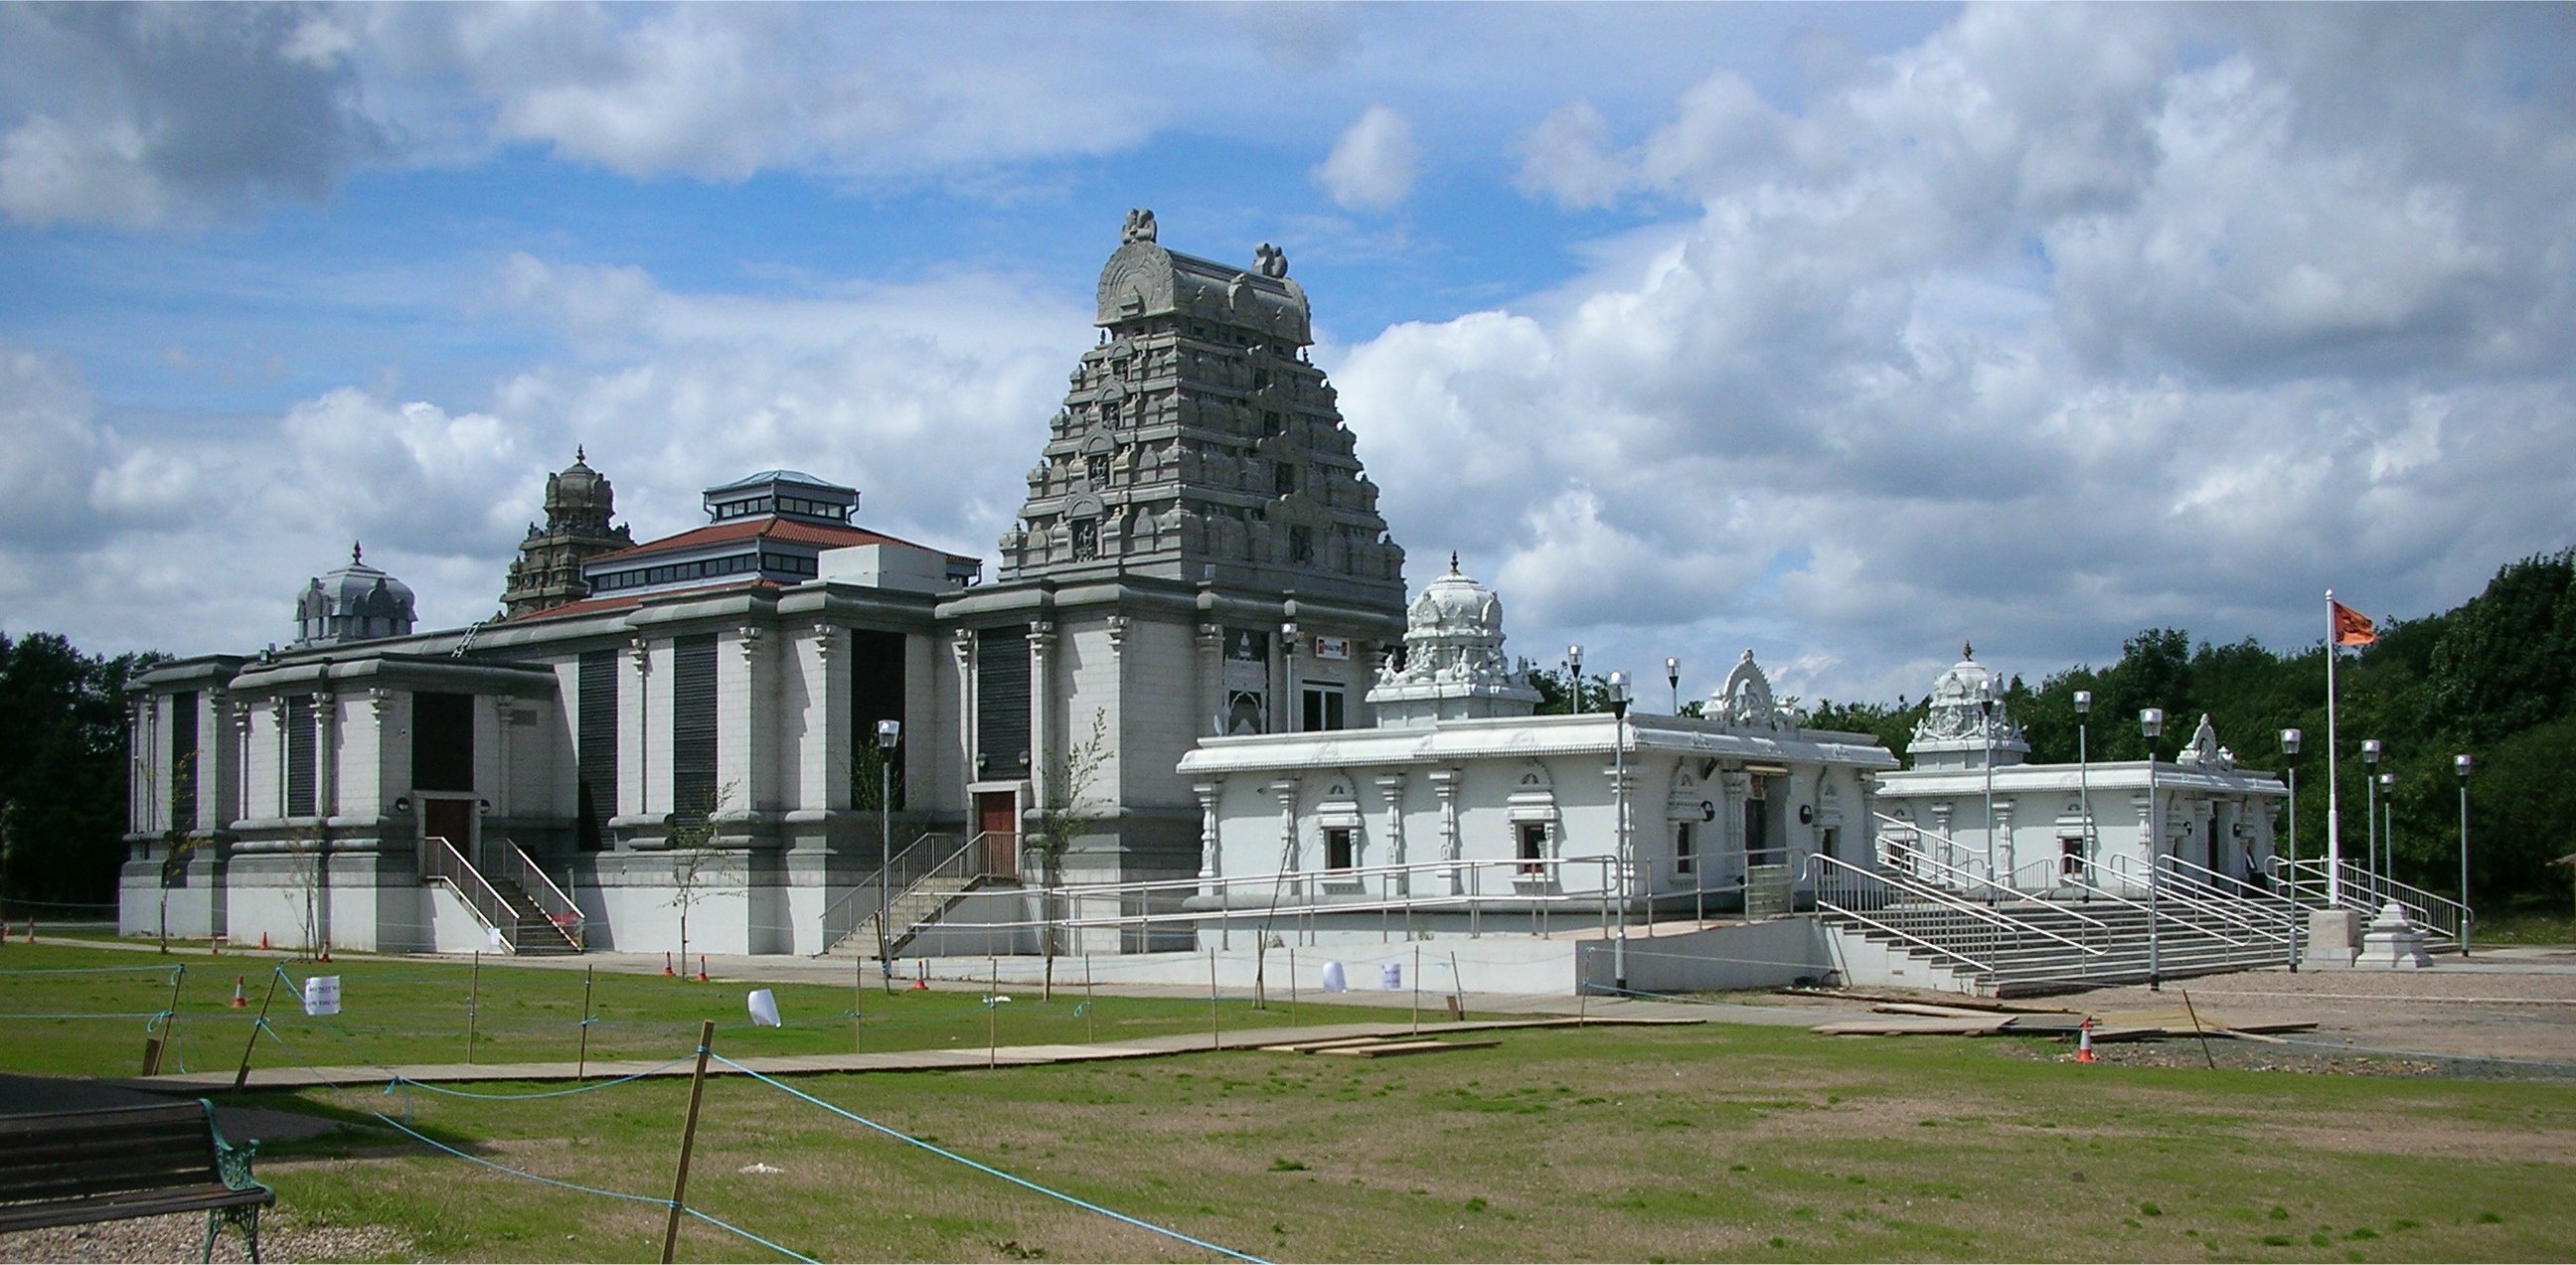 Sri Venkateswara (Balaji) Temple, West Midlands